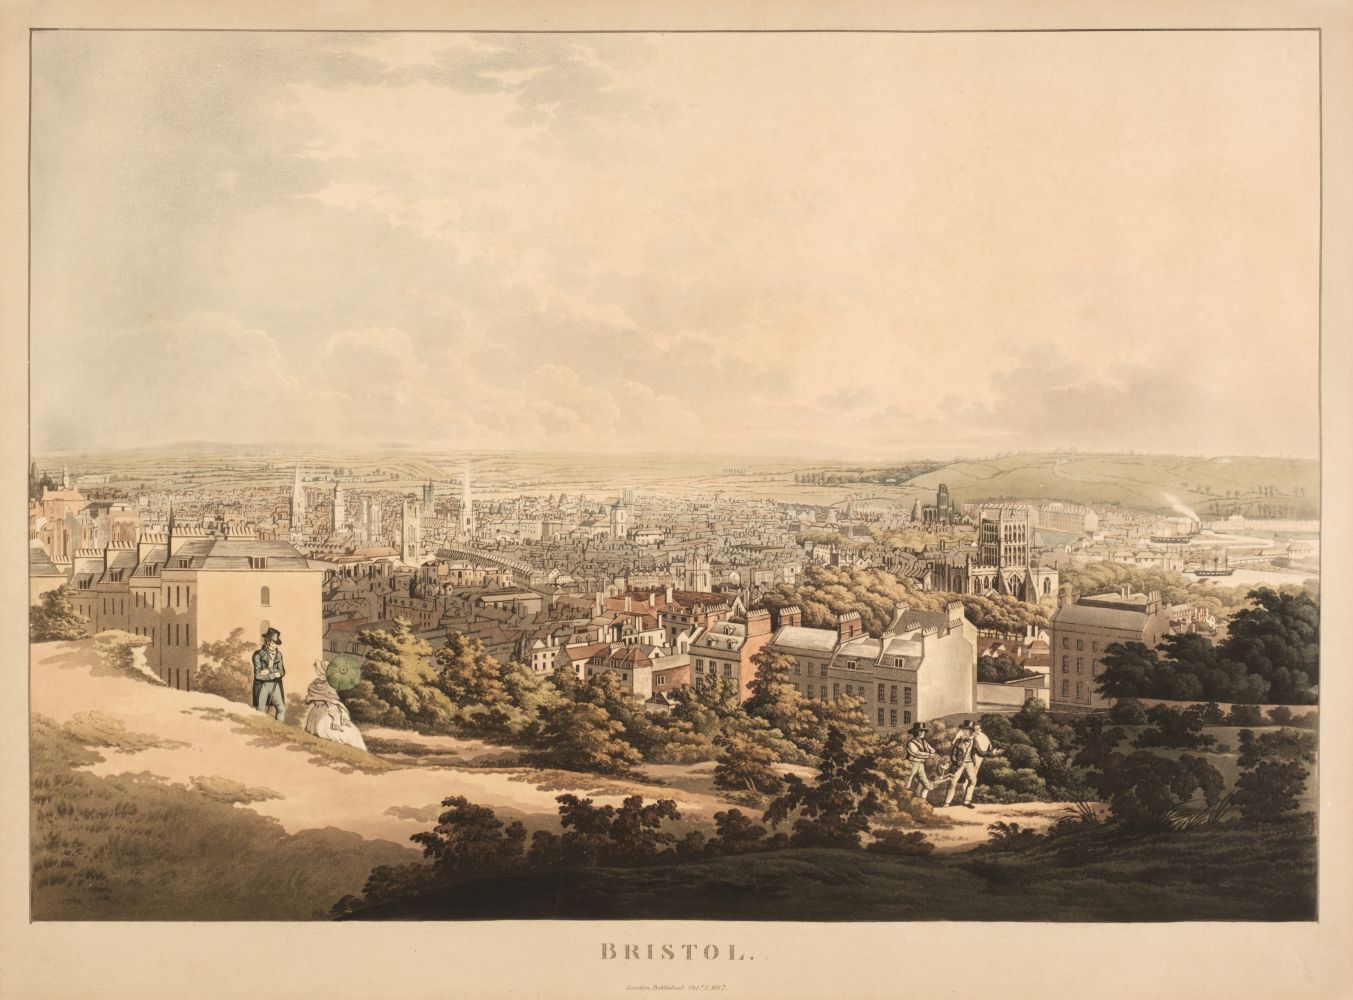 * Bristol. Anstie (Samuel, attrib.), Bristol, Oct. 1st., 1817